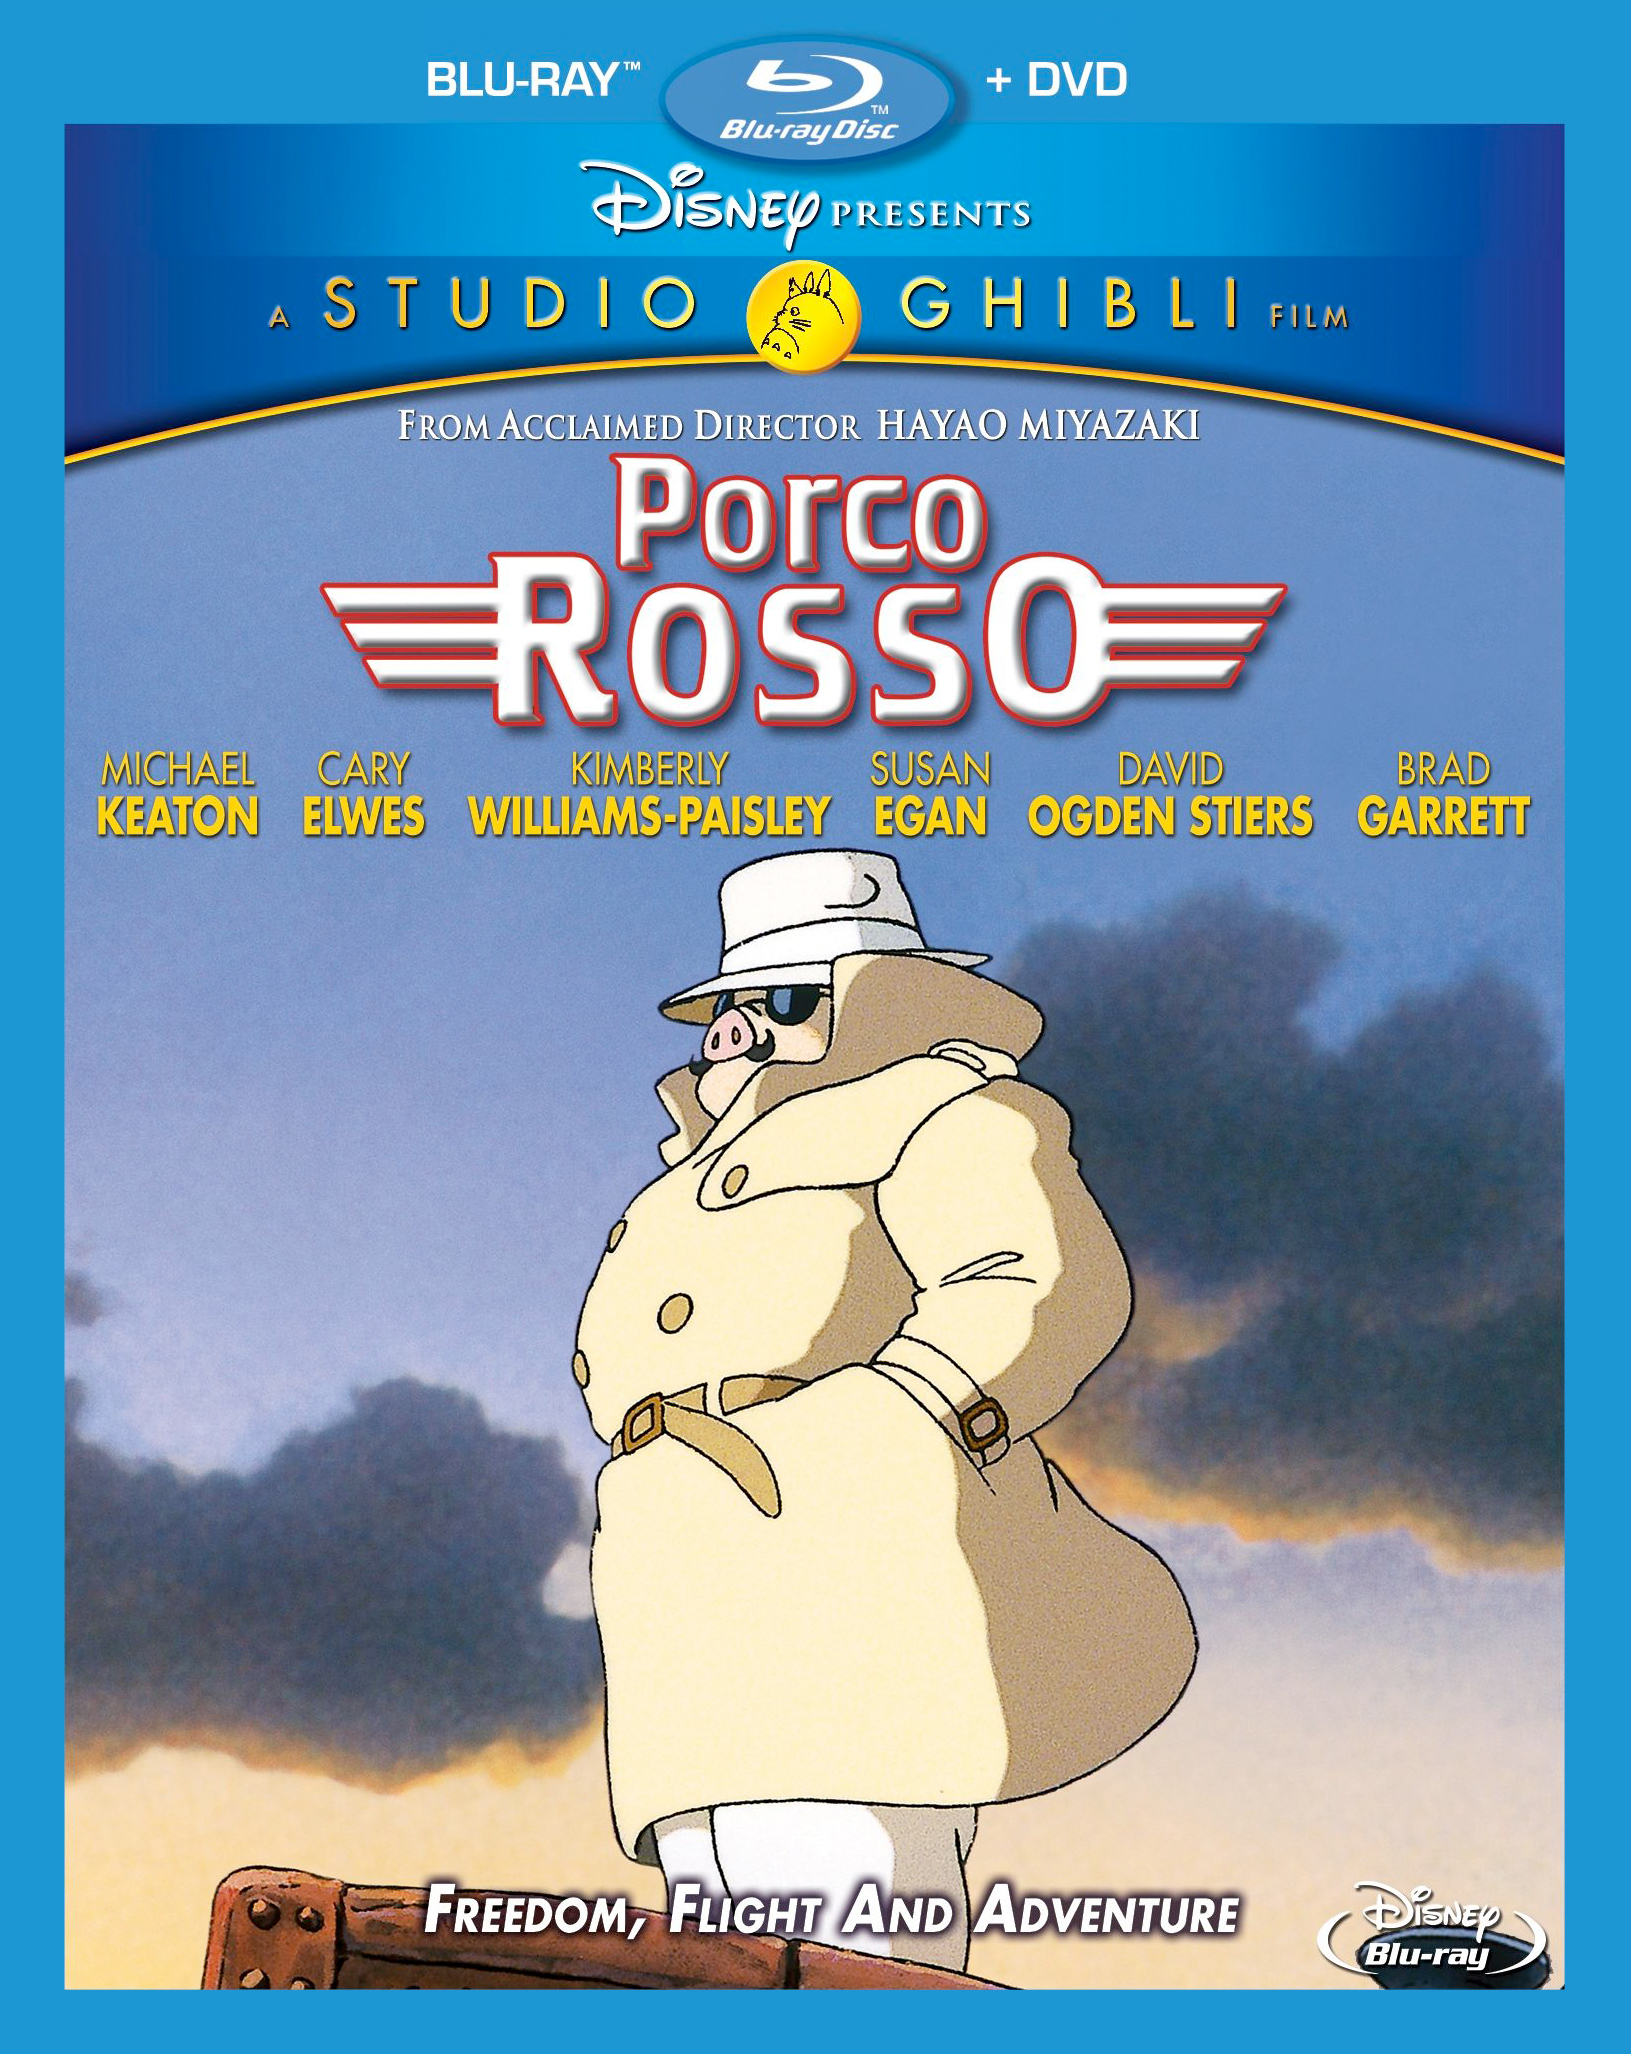 PORCO ROSSO Explained  Studio Ghibli Lore 